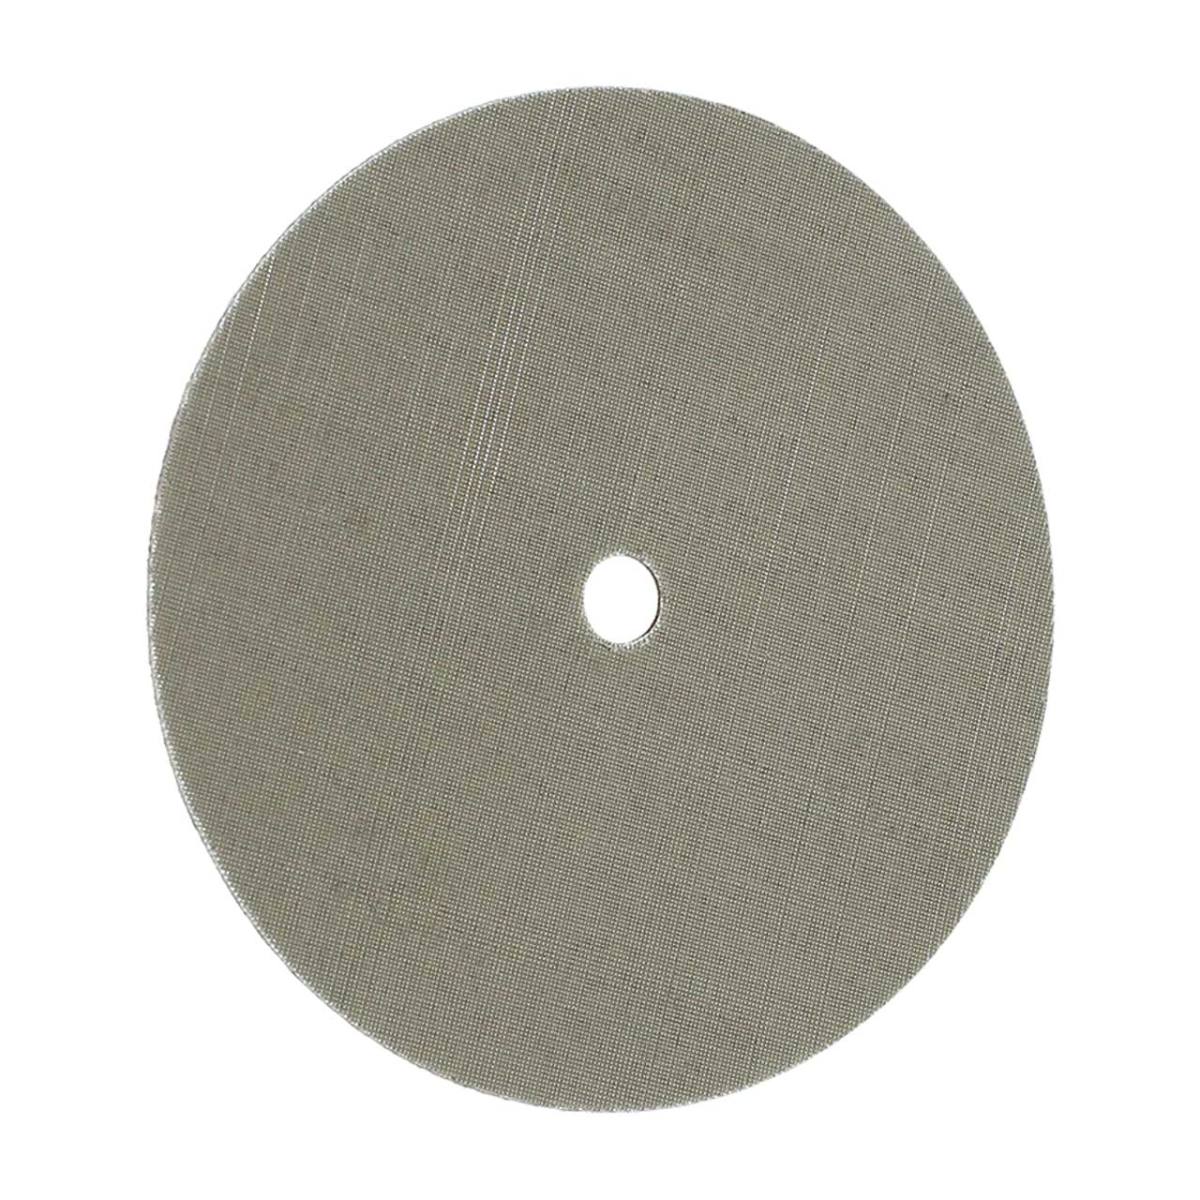 FIX KLETT Trizact disc, 150 mm x 10 mm, grain 400 / A 45, hook-and-loop fastener